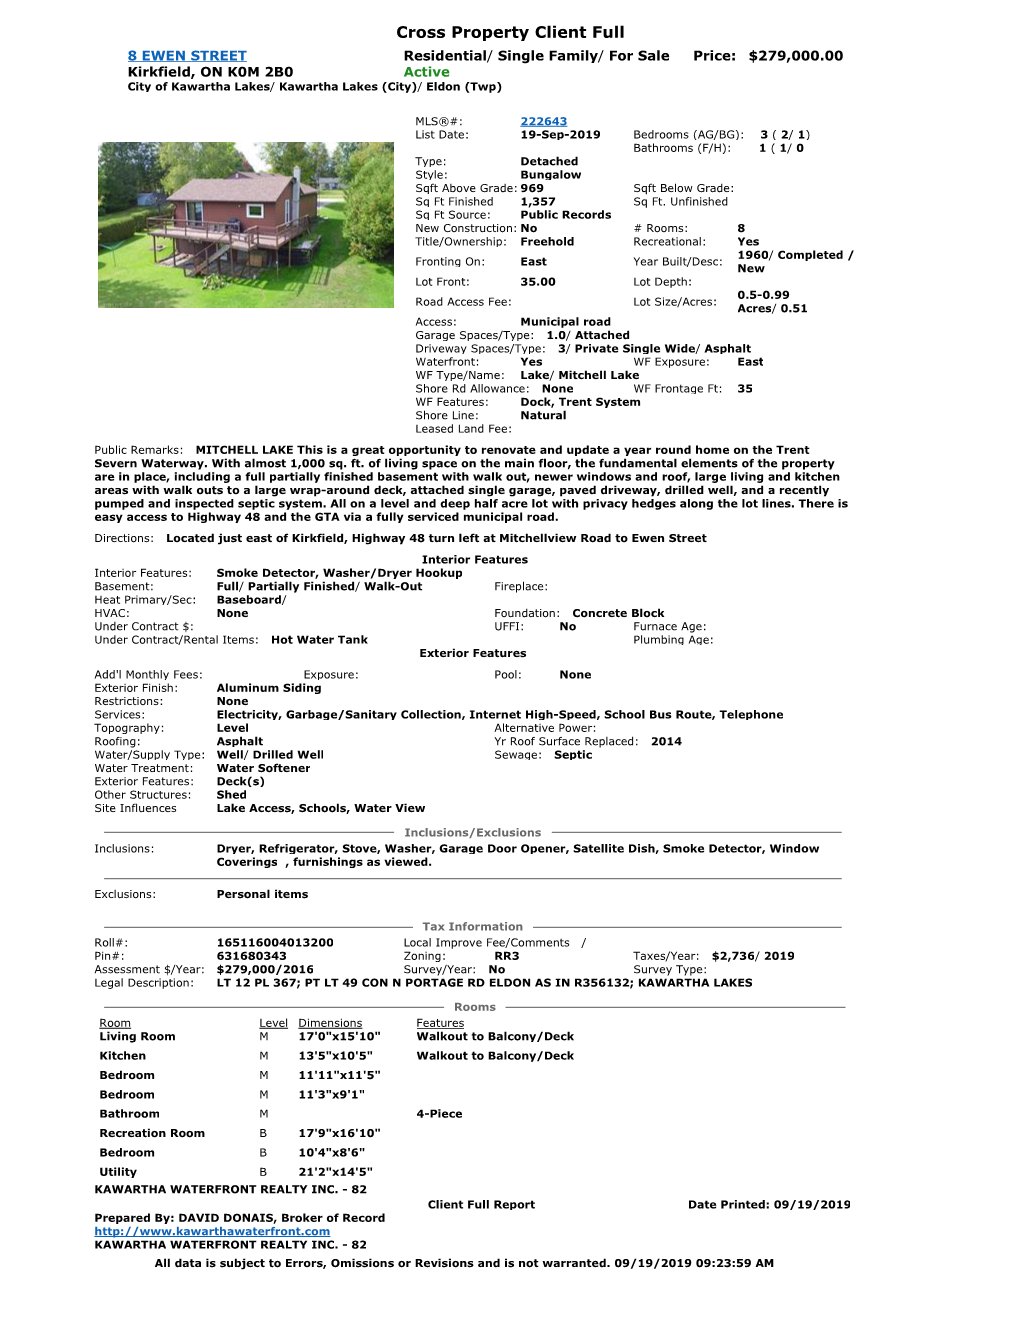 8 EWEN STREET Residential / Single Family / for Sale Price: $279,000.00 Kirkfield, on K0M 2B0 Active City of Kawartha Lakes / Kawartha Lakes (City) / Eldon (Twp)